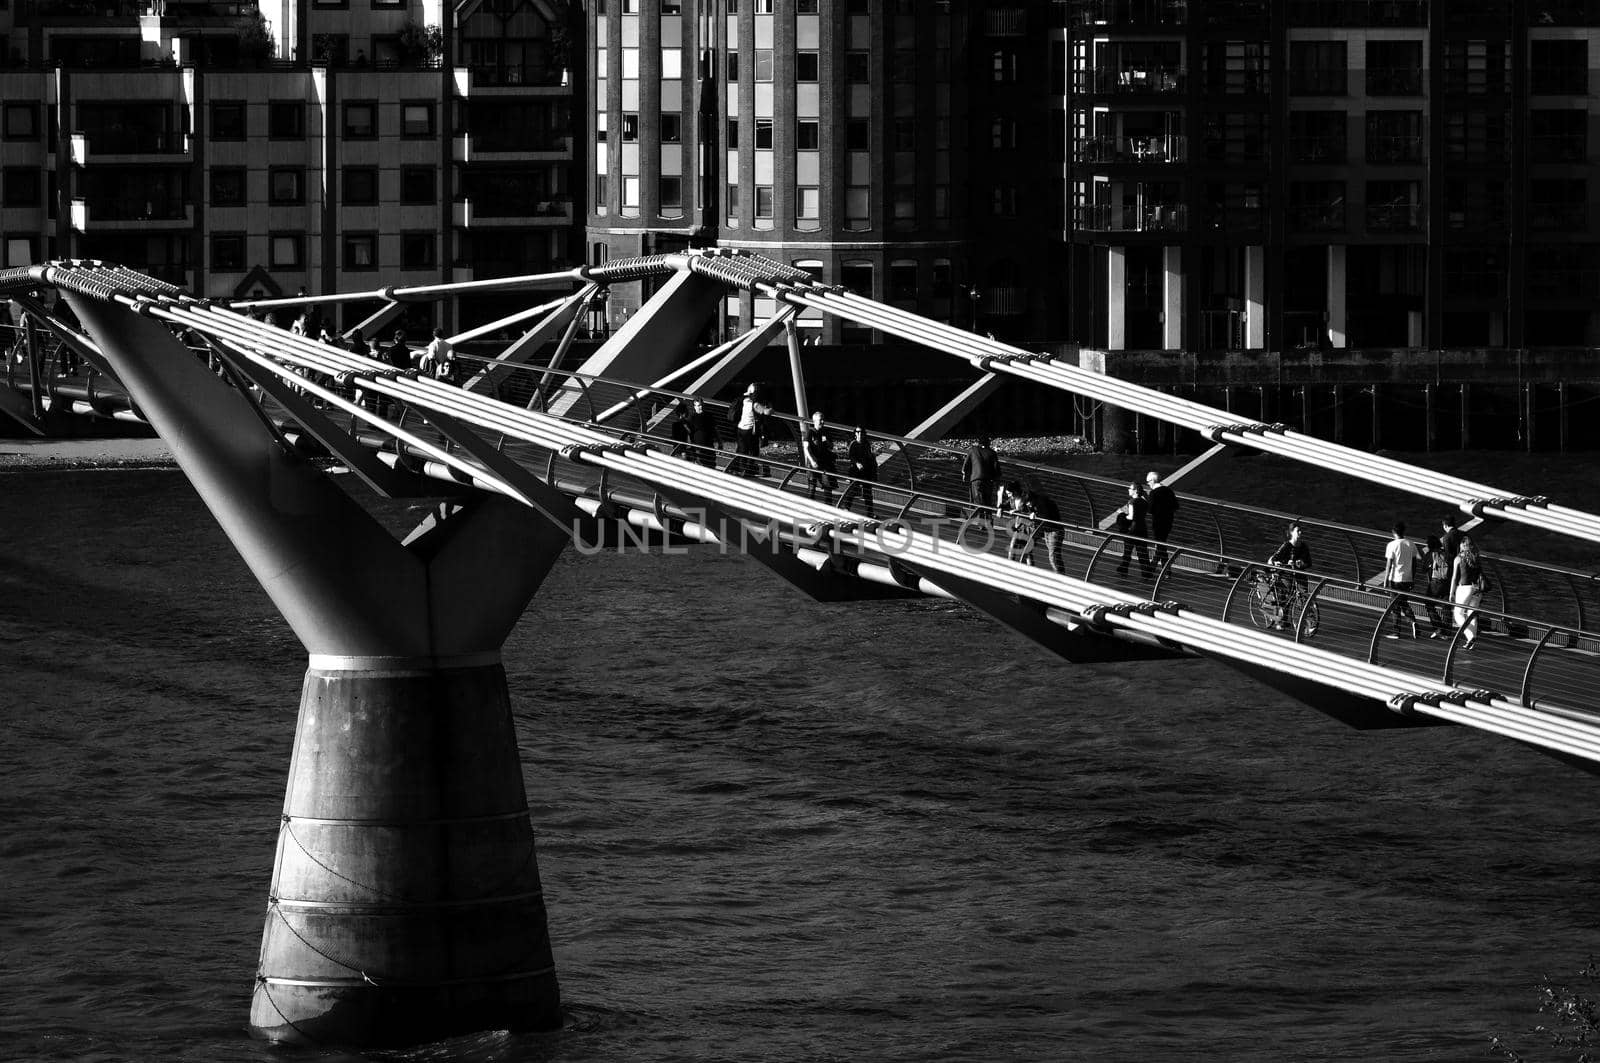 Black and white shot of the Millennium Bridge in London, UK by dutourdumonde